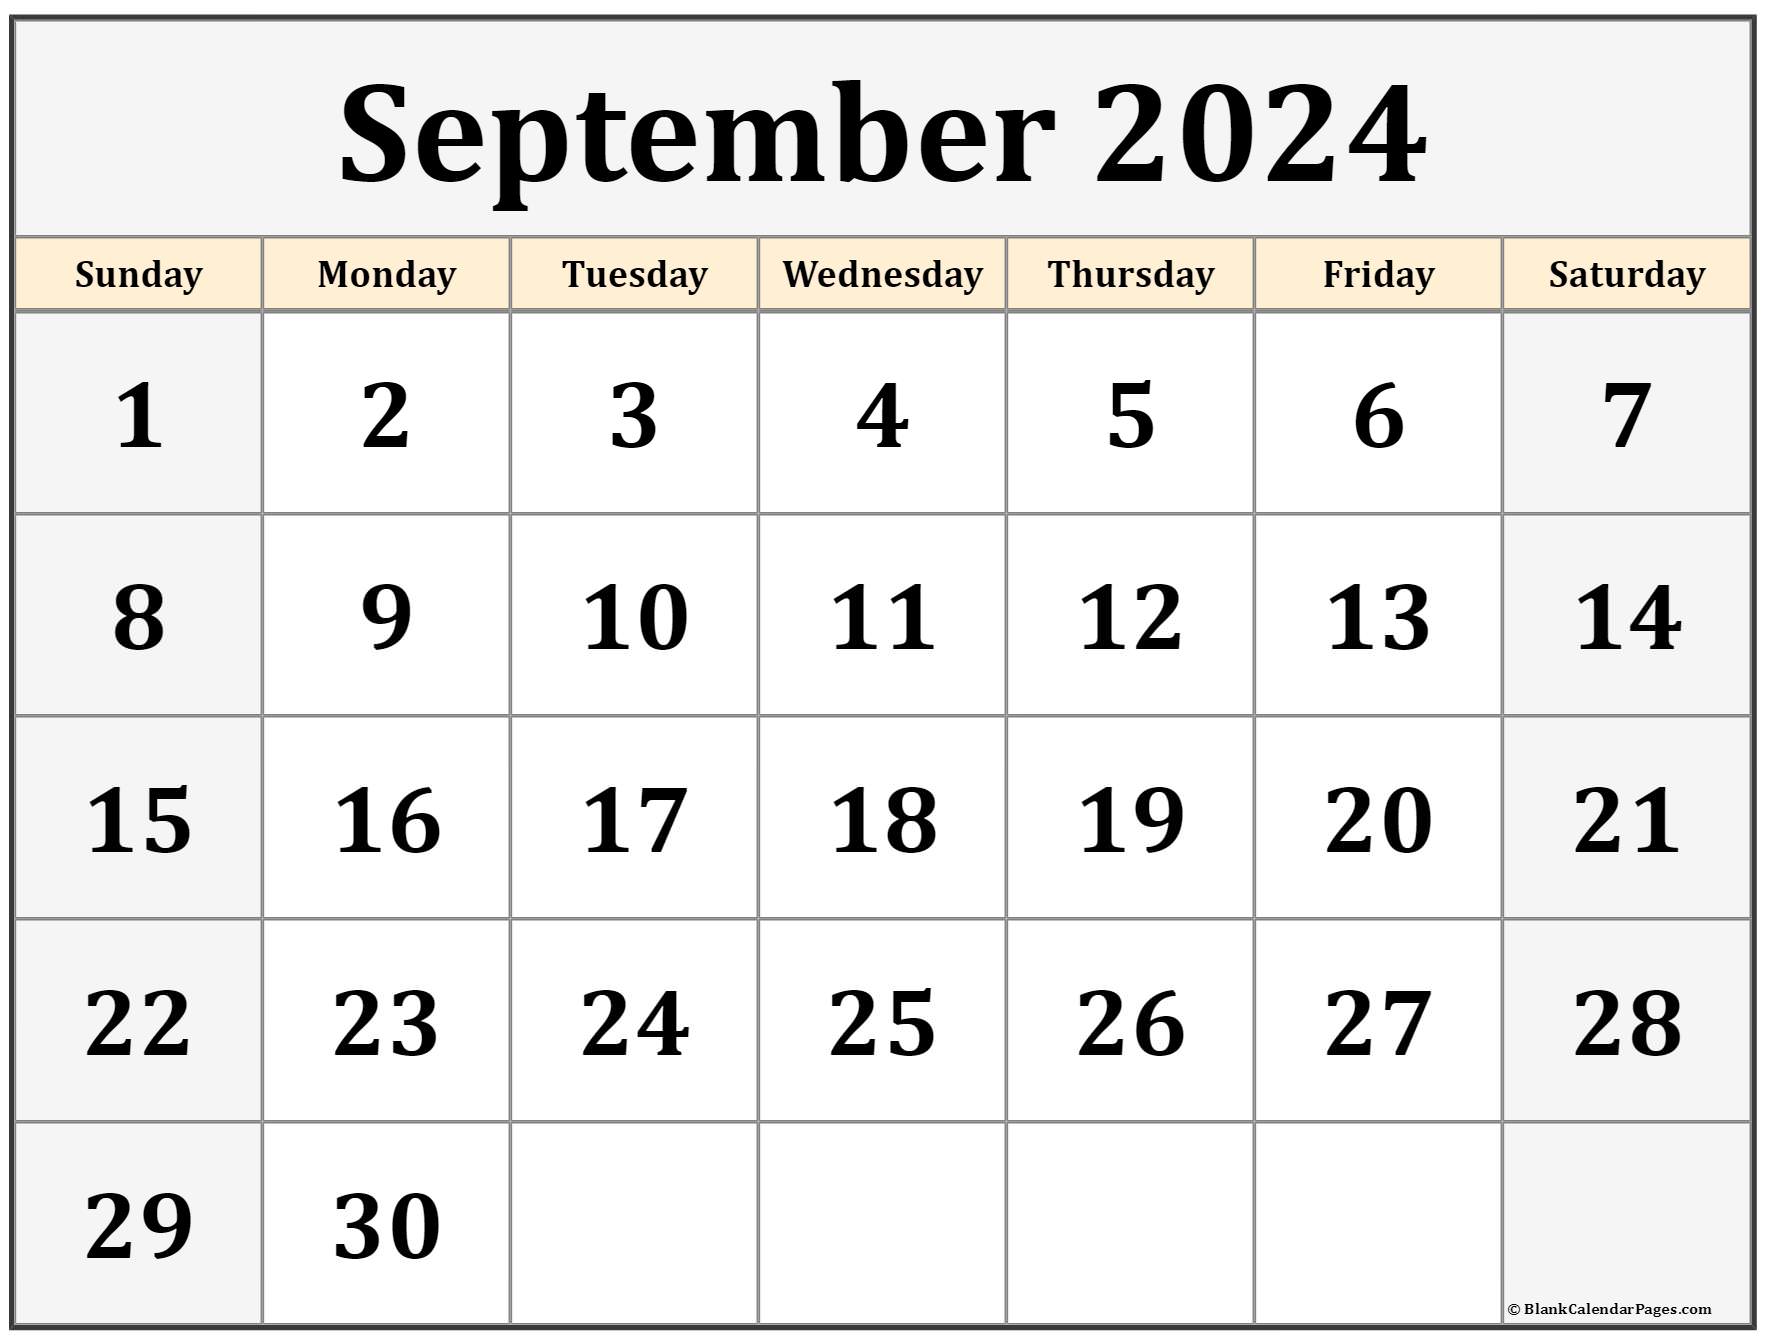 September 2022 calendar | free printable calendar